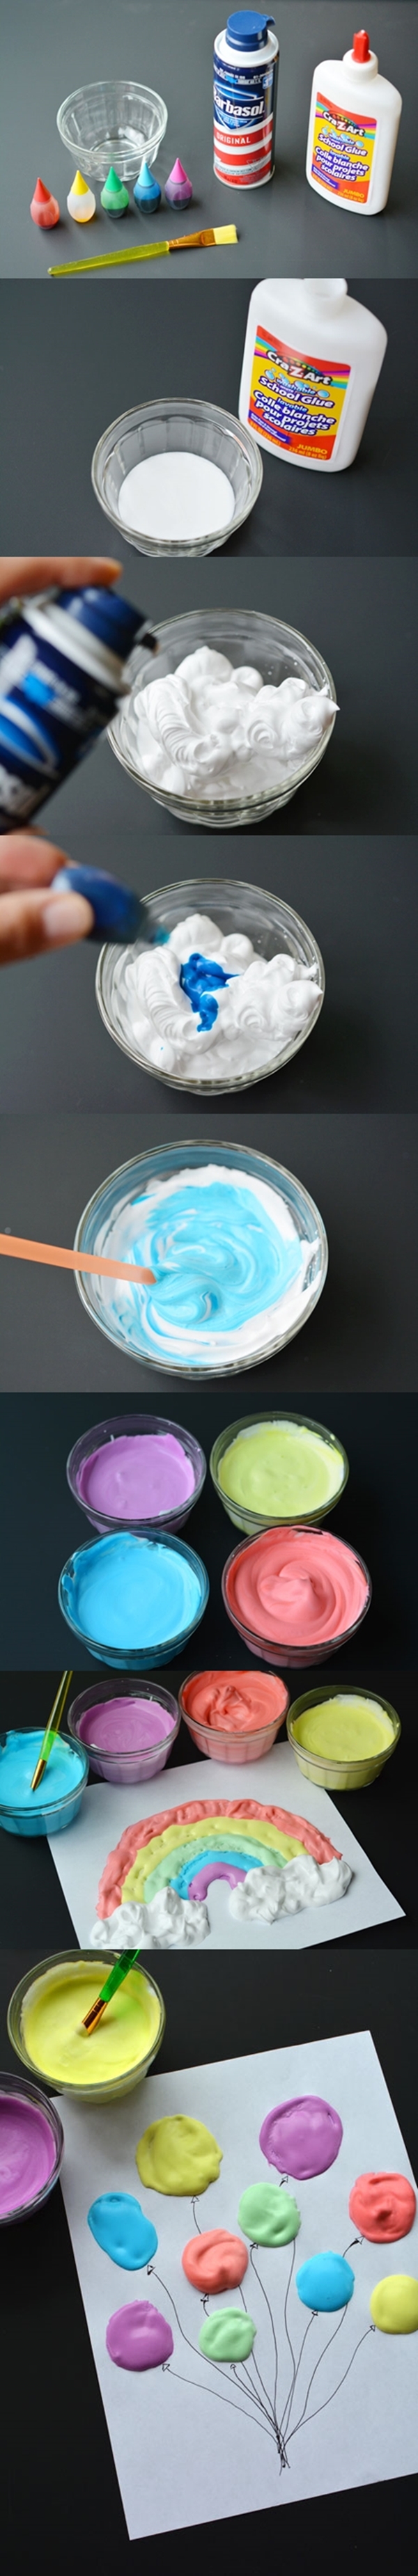 make-paint-crayons-glue